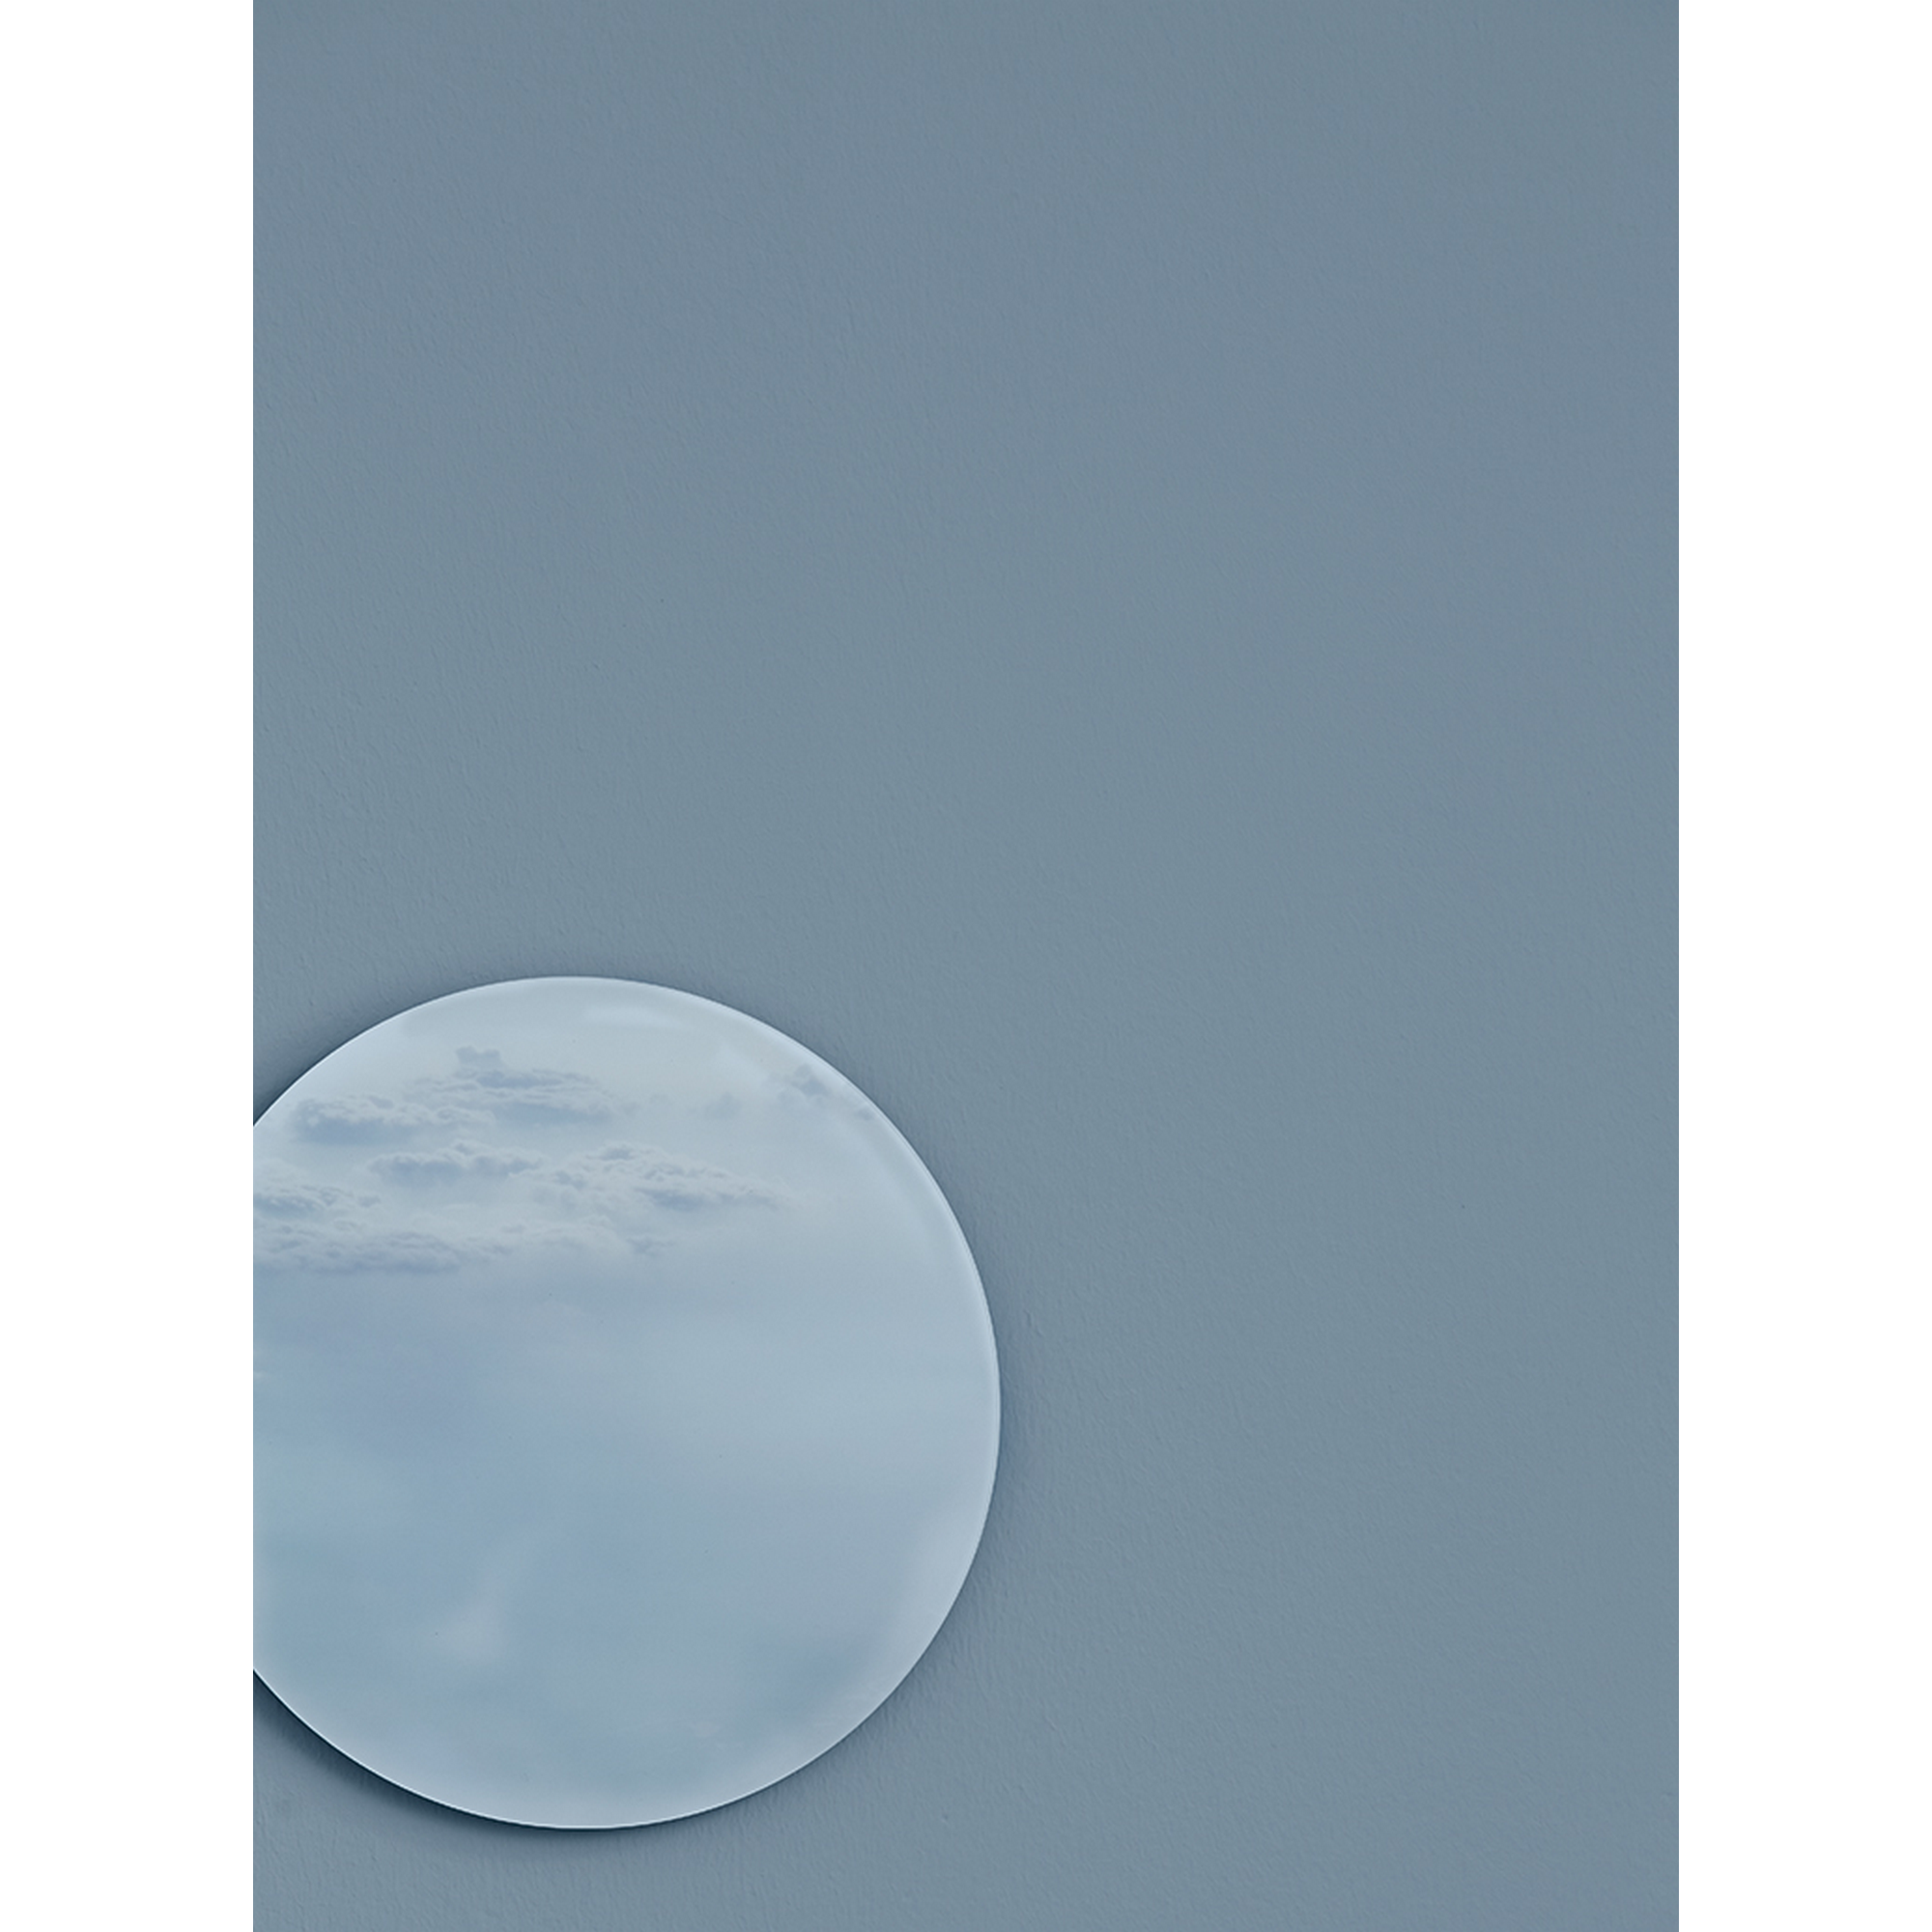 Feine Farben 'Ruhe des Nordens' graublau matt 2,5 l + product picture